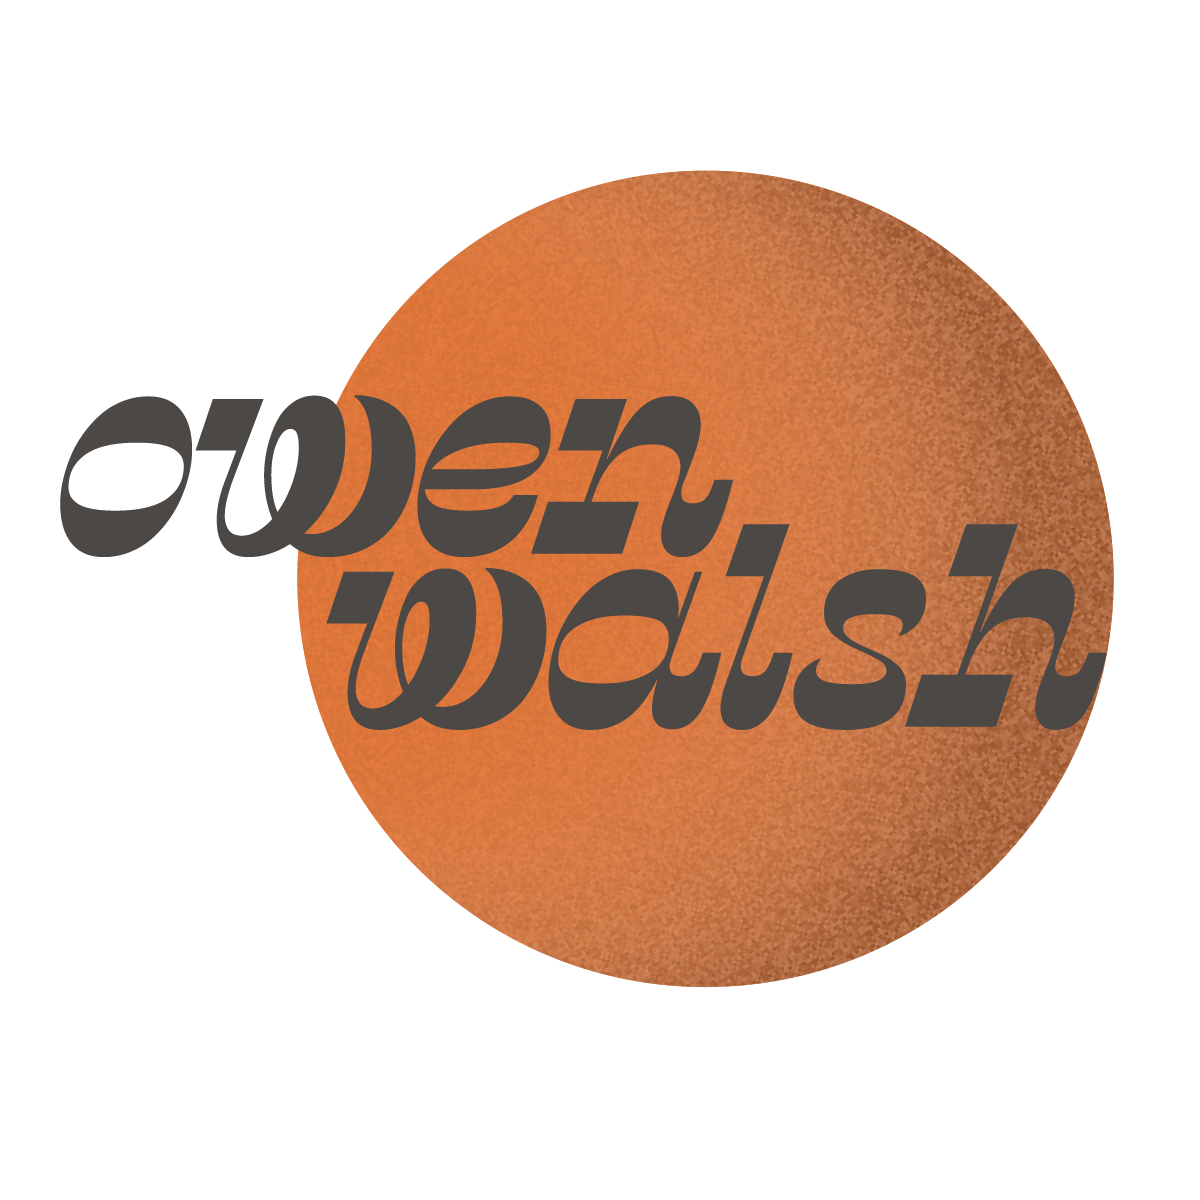 Owen Walsh